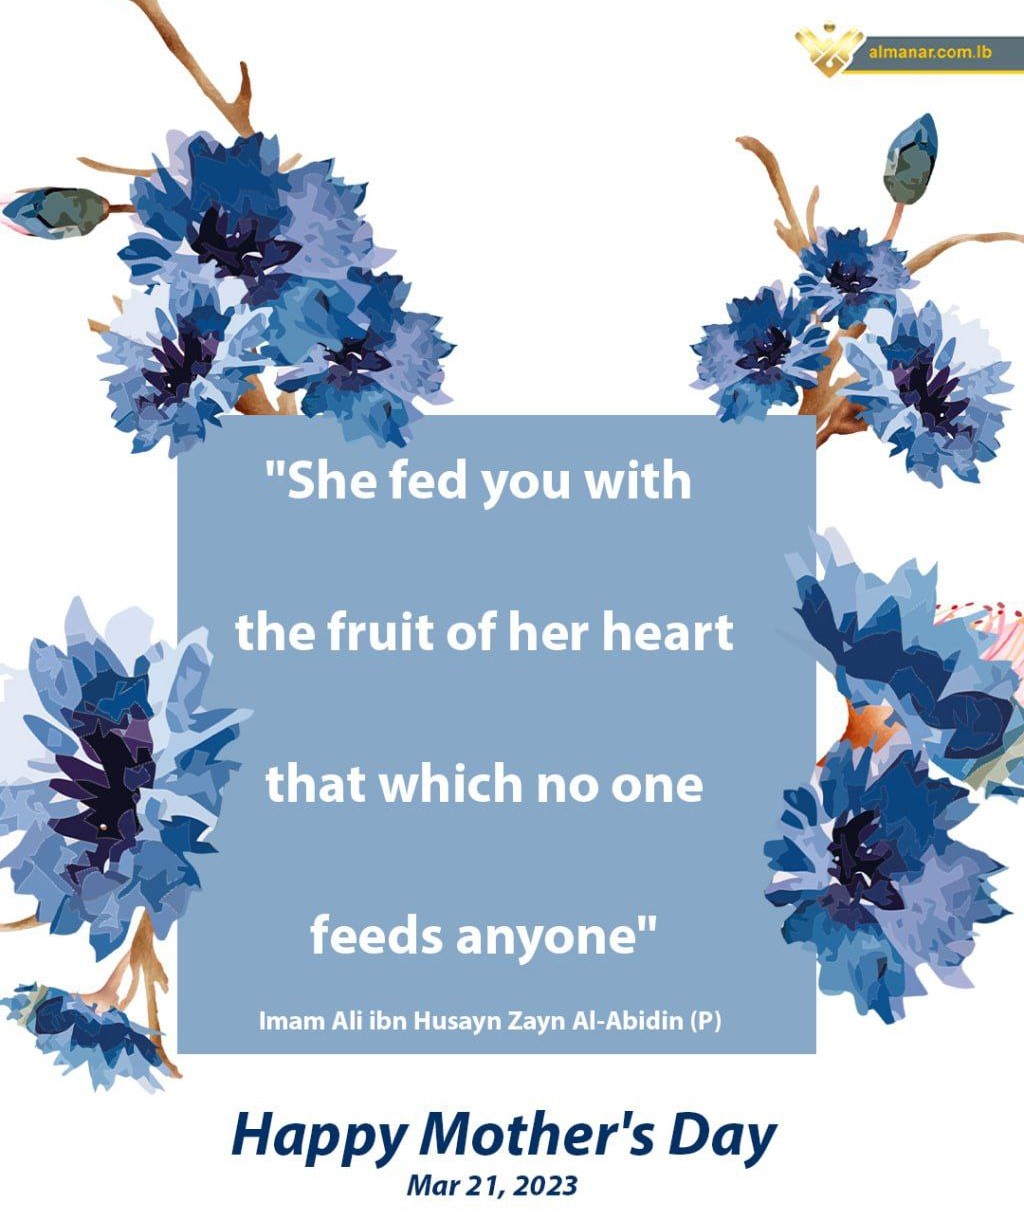 Mother's Day Al-Manar